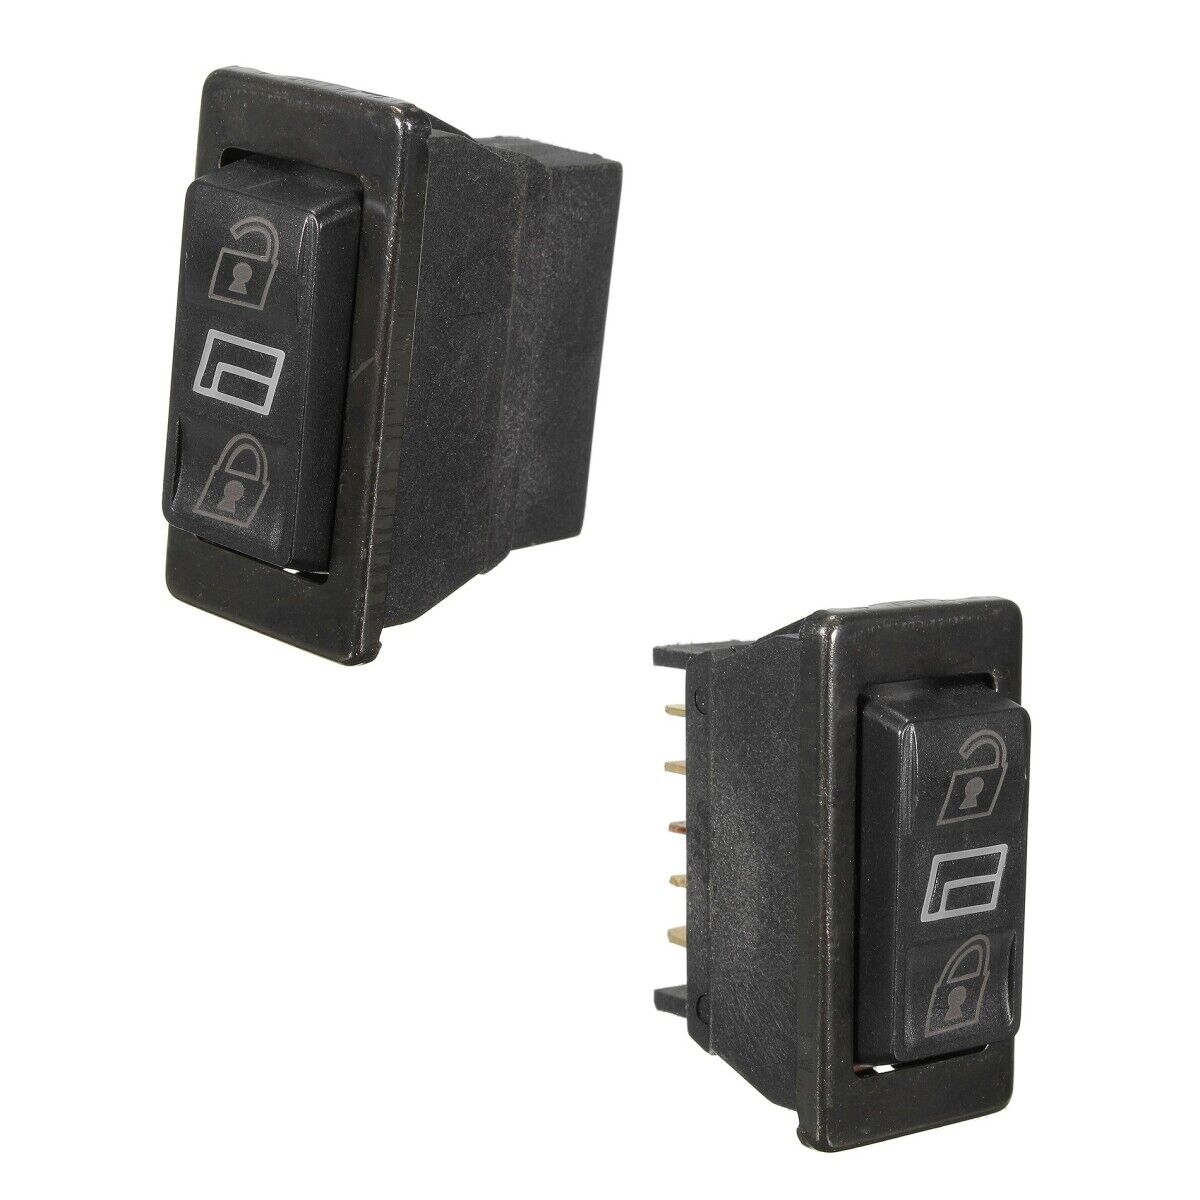 2x Universal Car Power Door Lock/Unlock Switch Spring Return Hoist 5-Pin DPDT